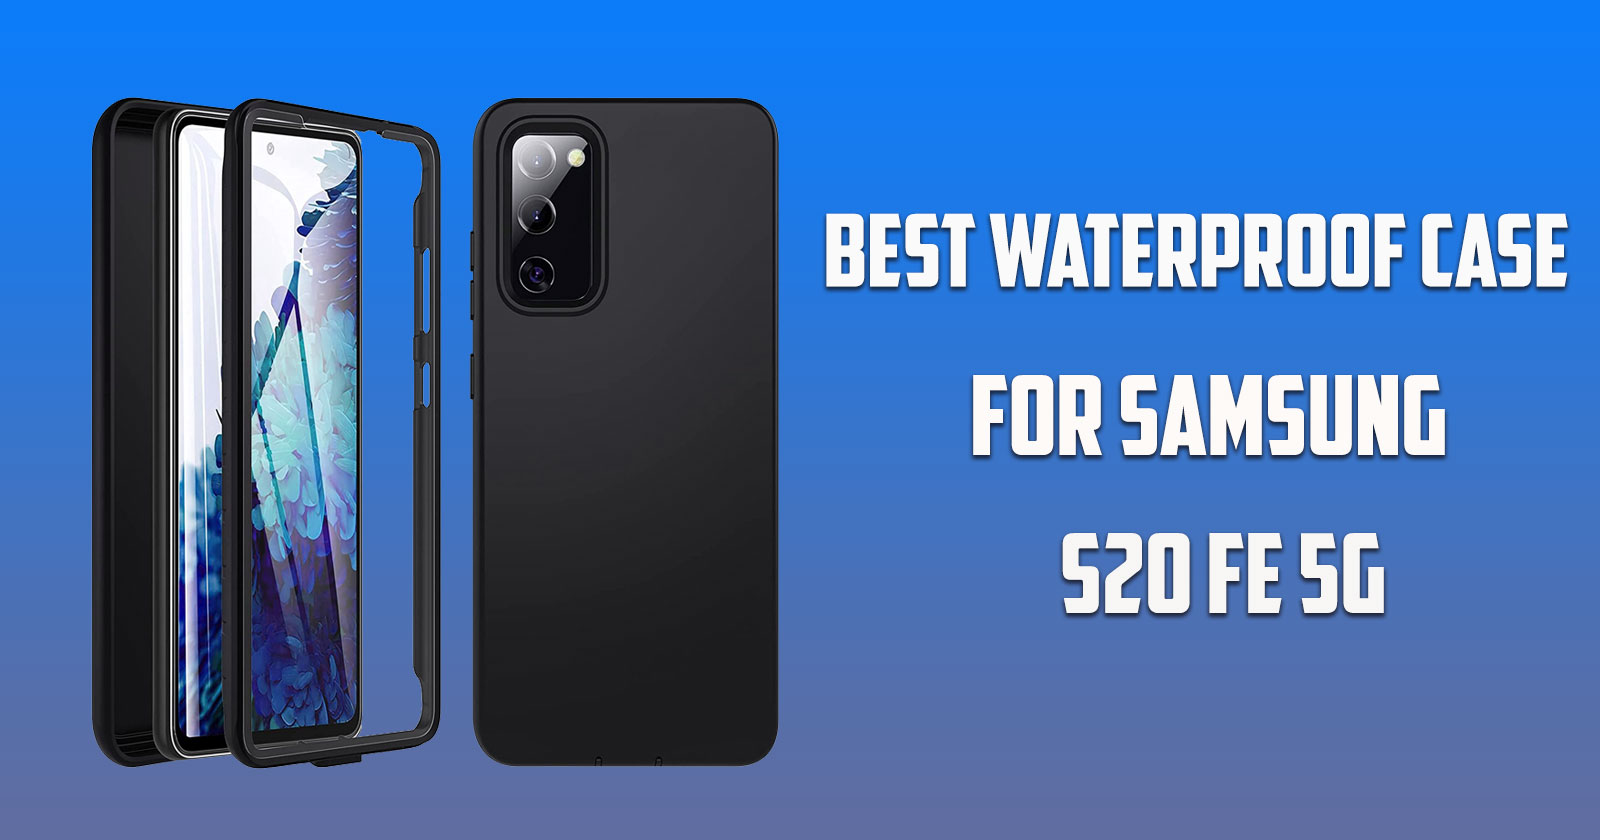 Best Waterproof Case for Samsung S20 FE 5G